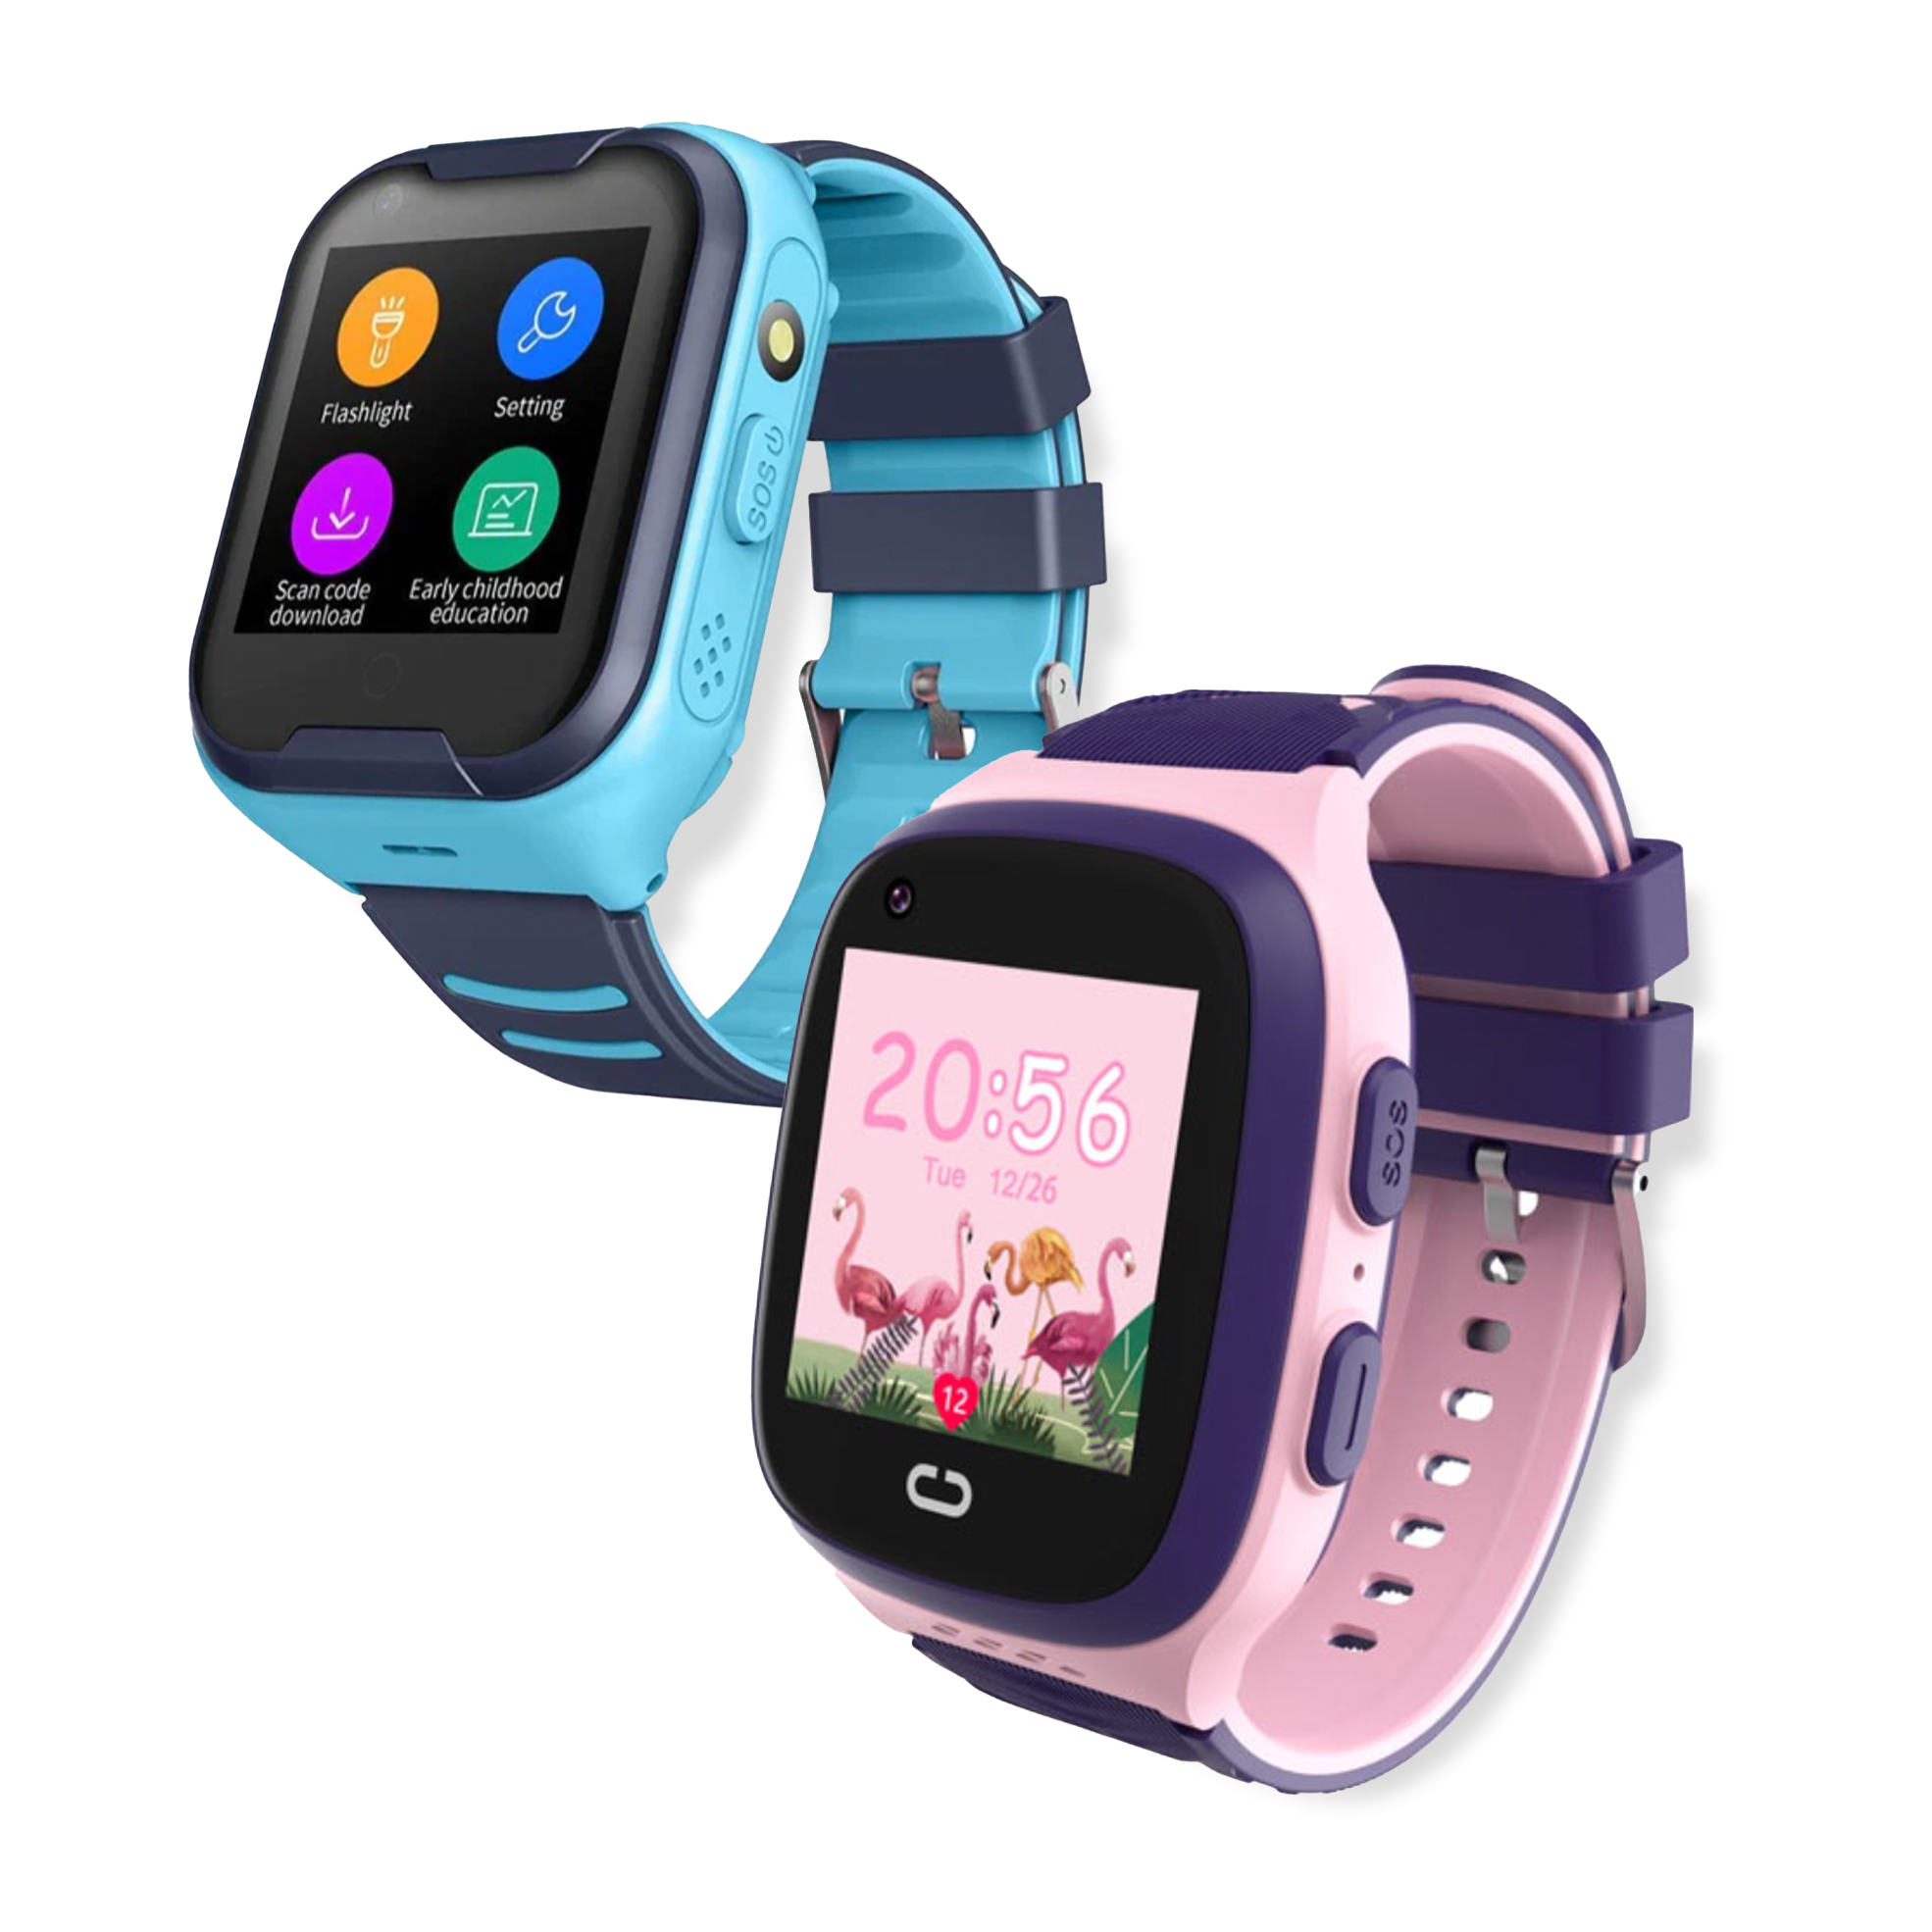 Volkano Kids GPS Tracking Watch - Pink VK-5030-PK - Friedman & Cohen